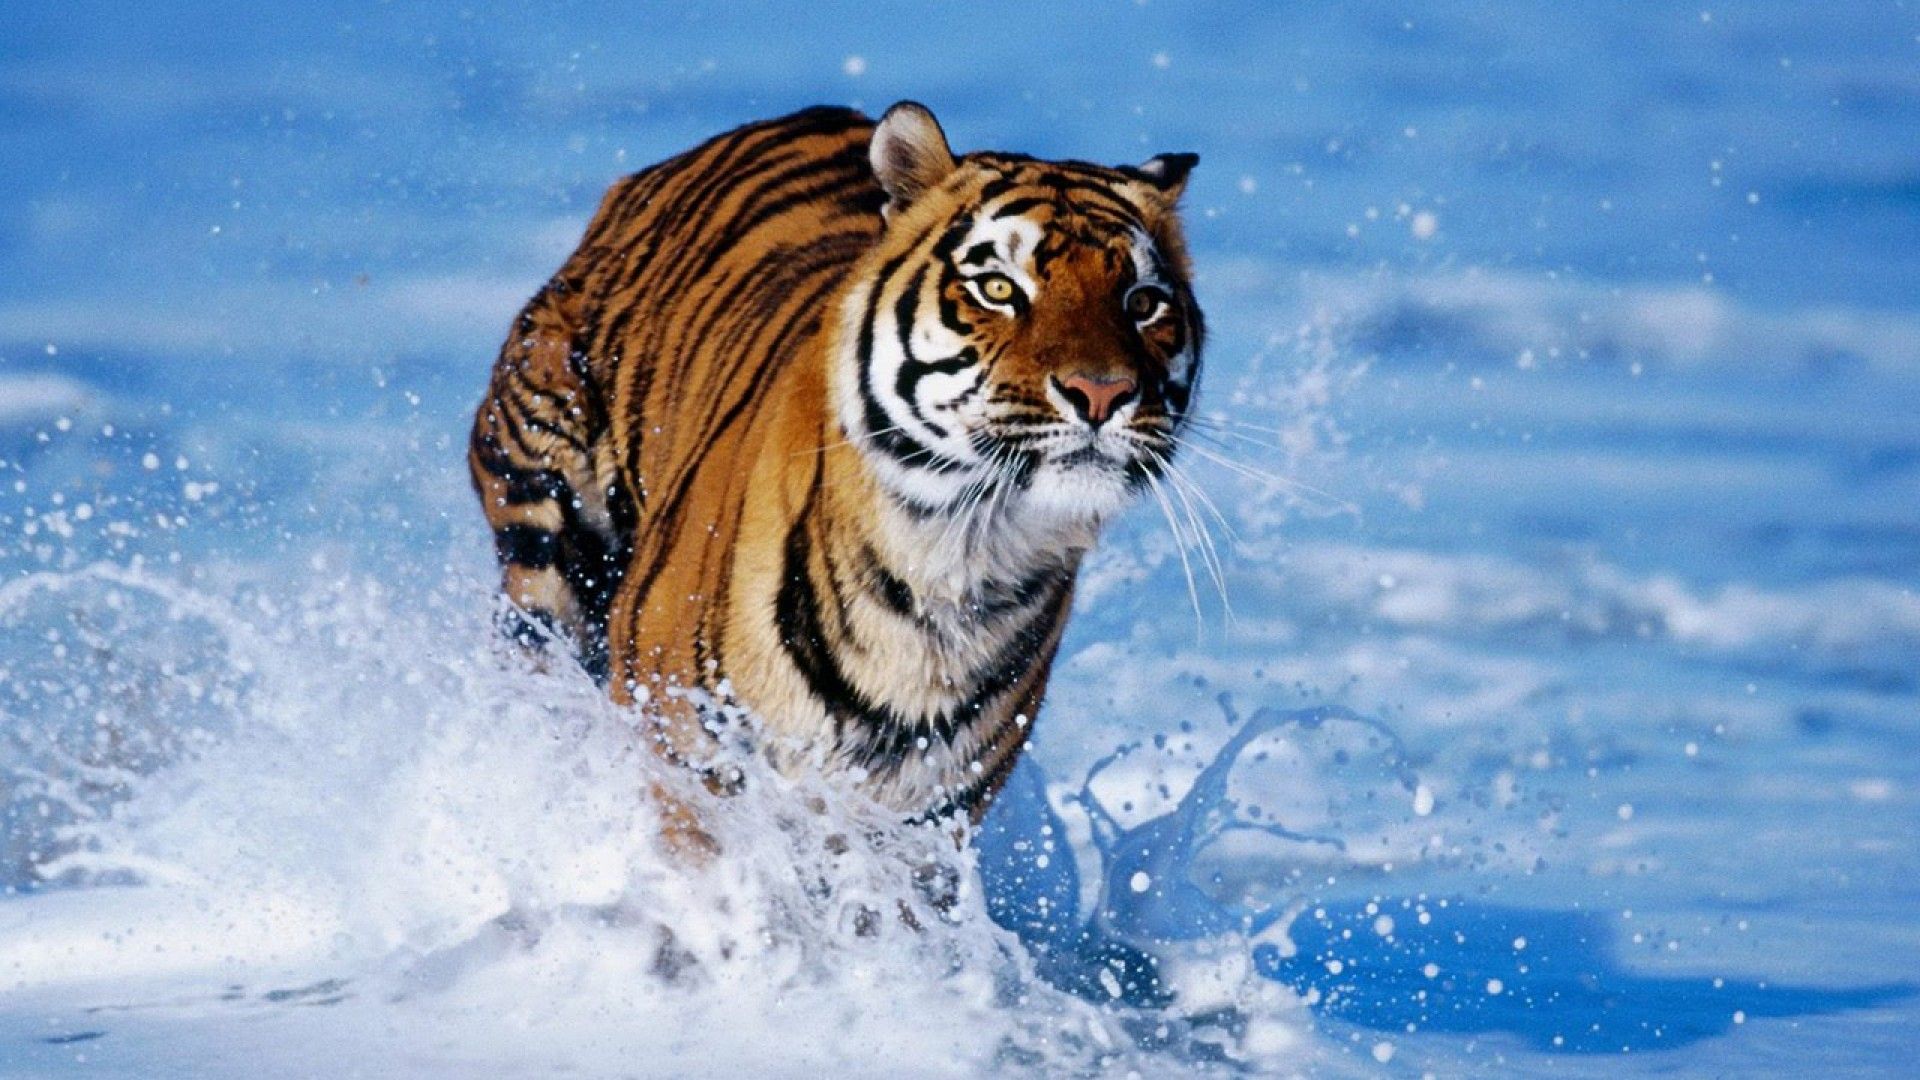 tiger image download